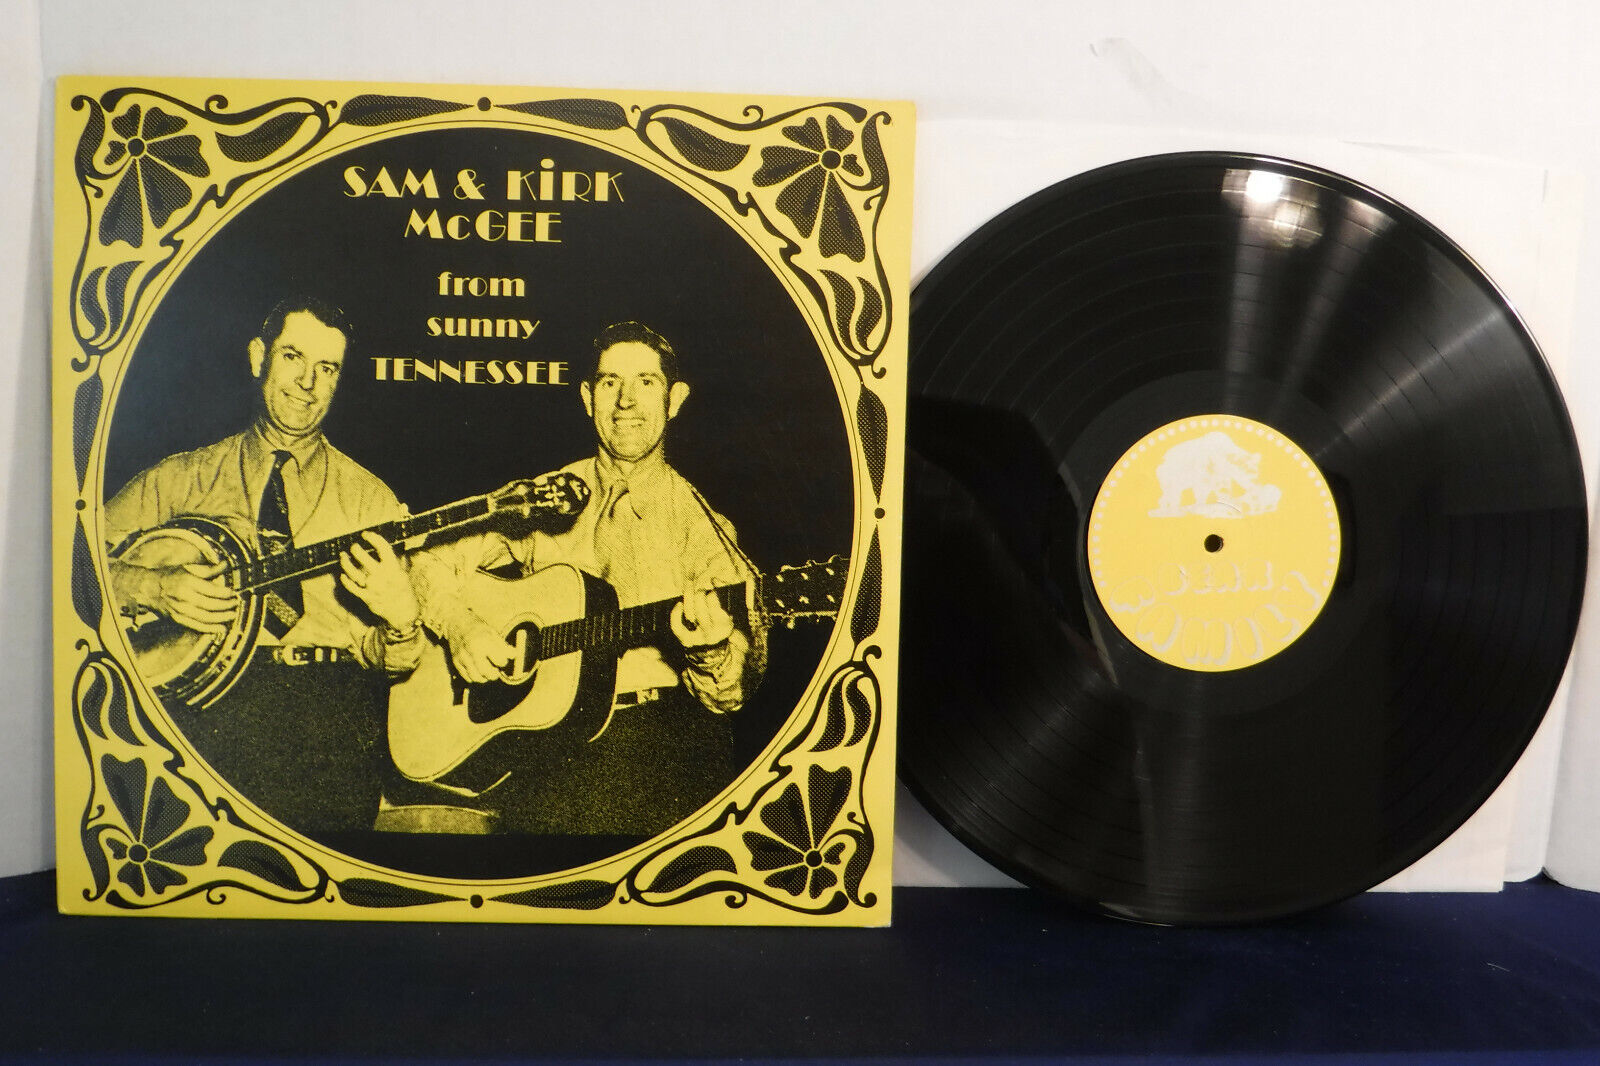 Sam & Kirk McGhee from Sunny Tennessee, Bear Family Records 15517, 1975, Insert